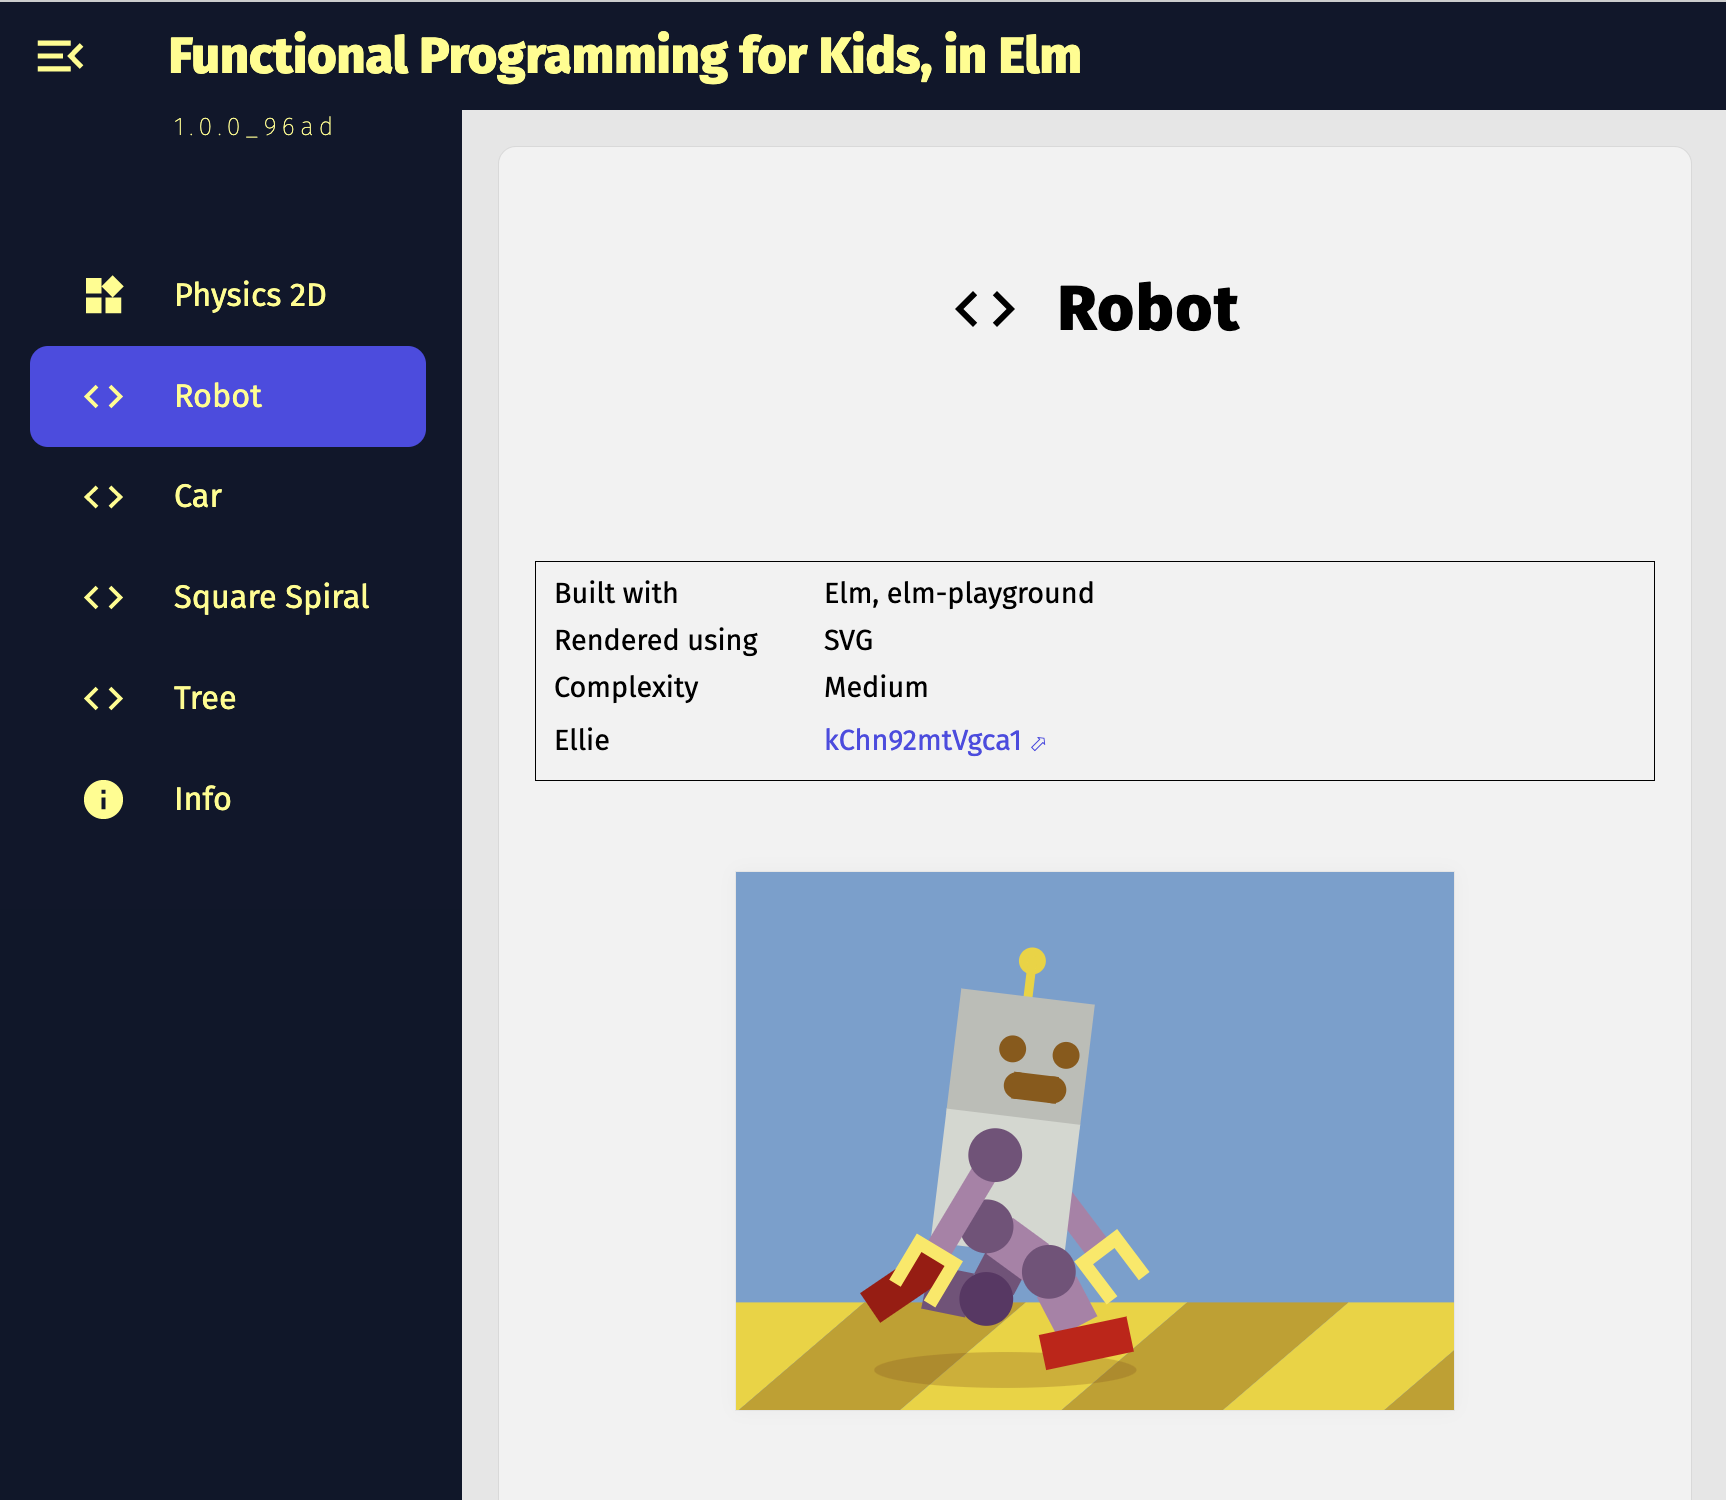 Functional Programming for Kids in Elm